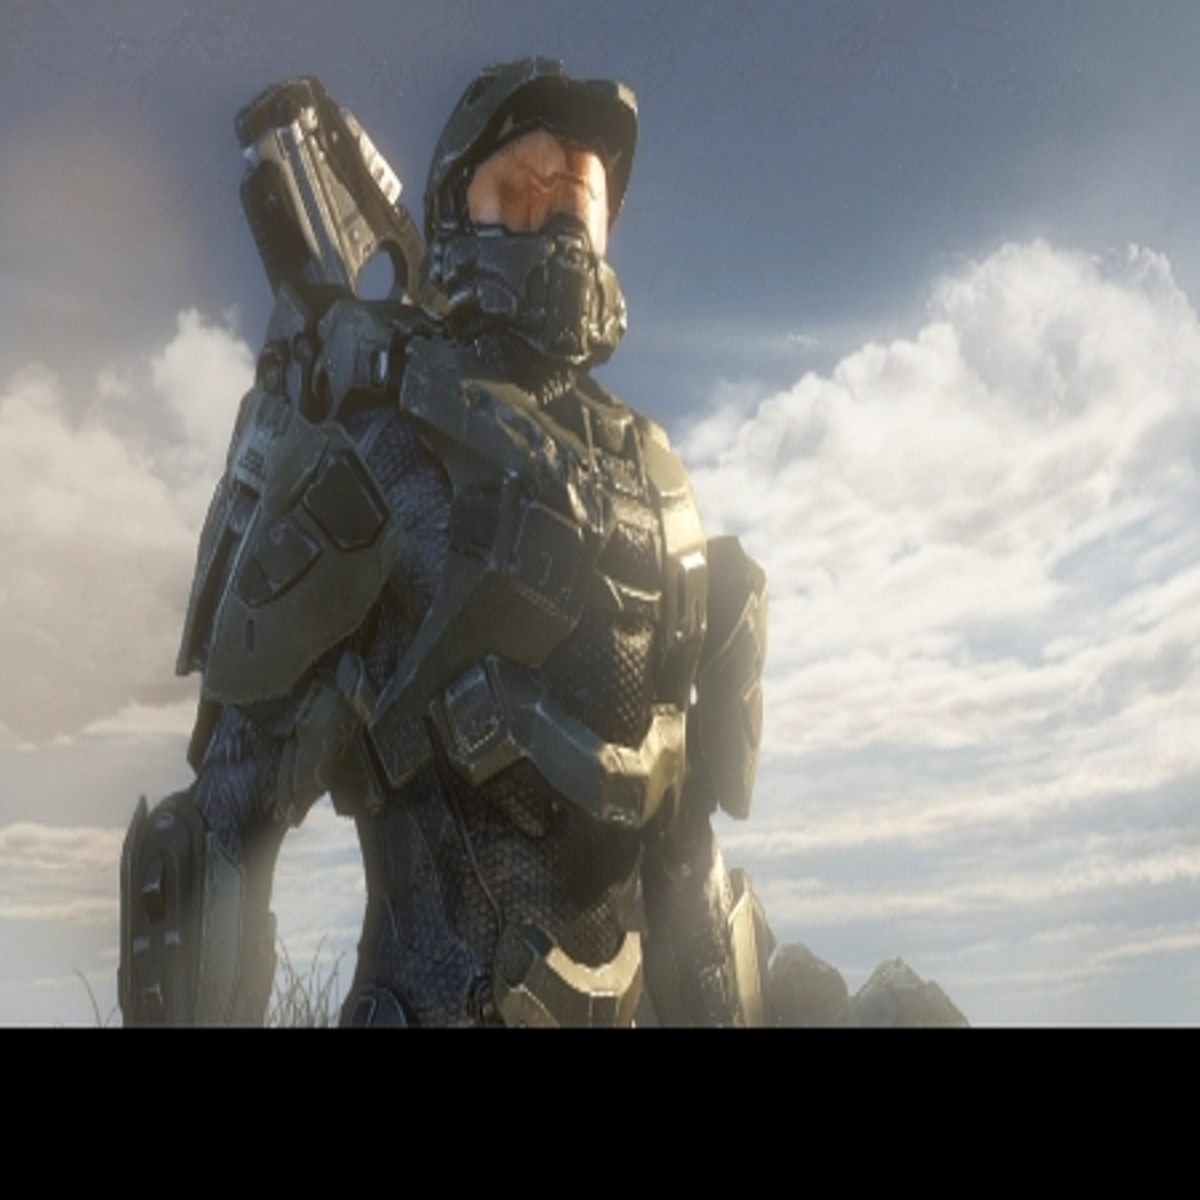 Halo 4 Developer Pledges 'Darker' Tone for Shooter Series